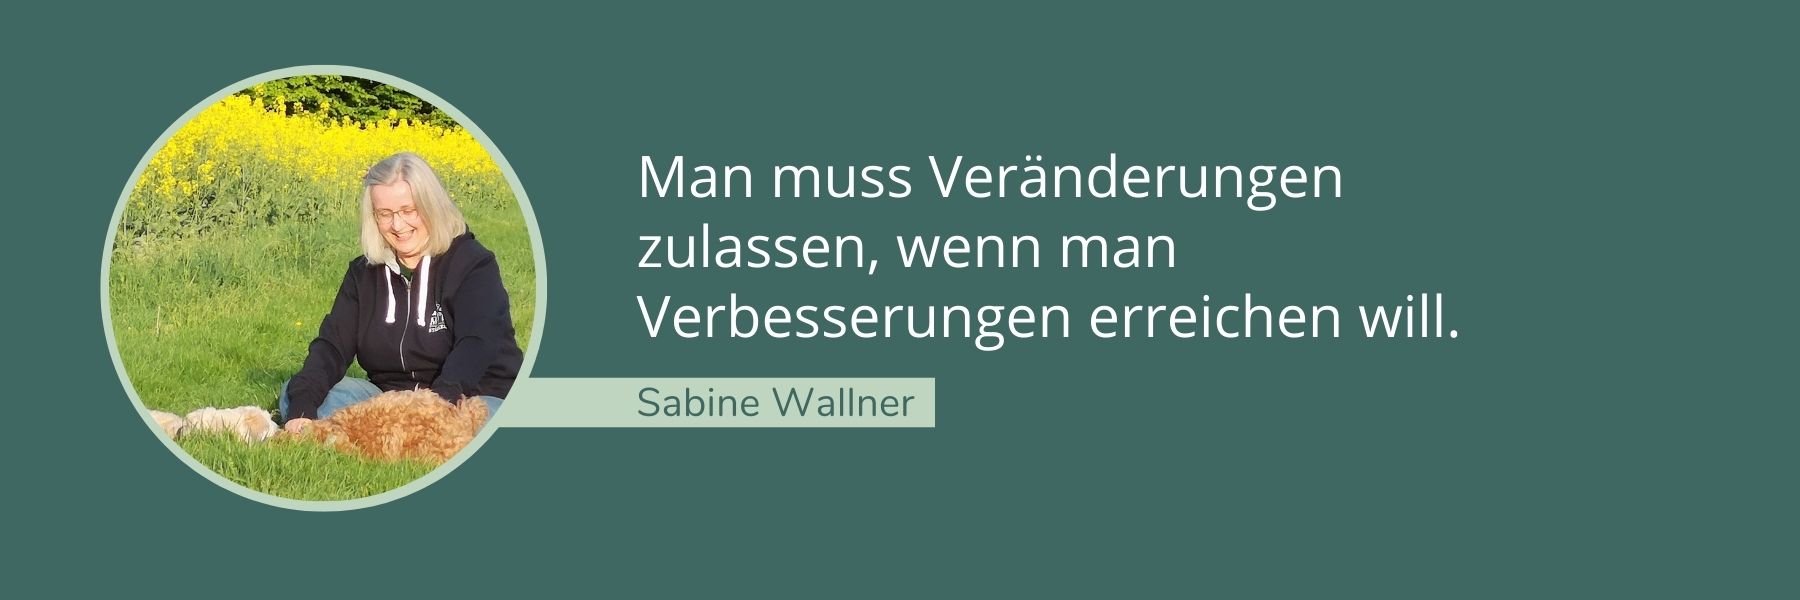 Sabine Wallner - Tierkommunikatorin